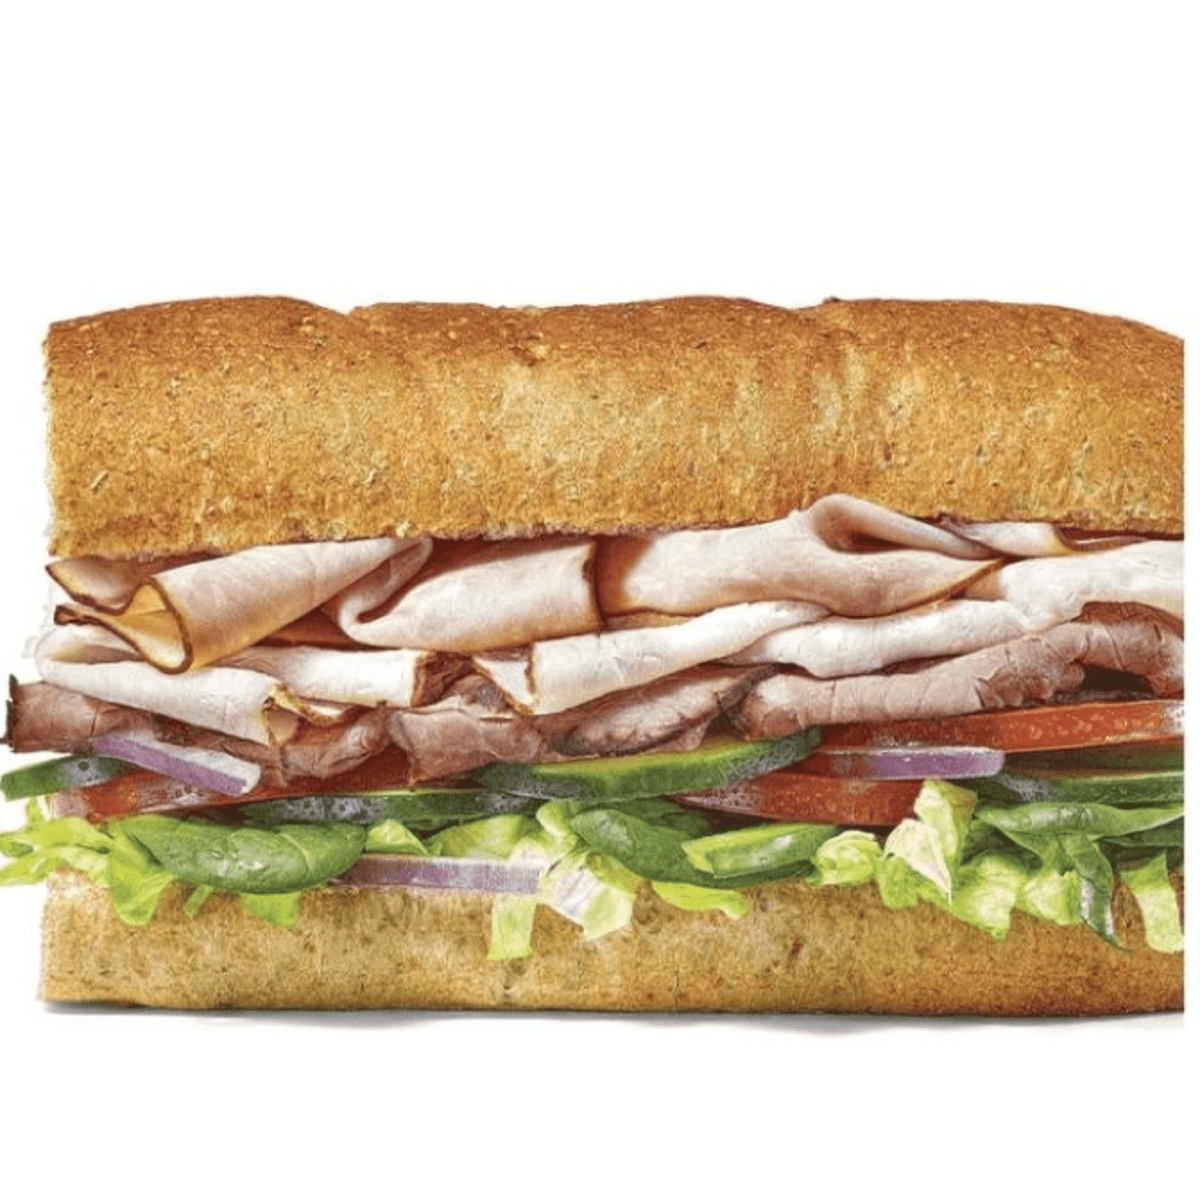 A turkey sub sandwich is shown on a white background.